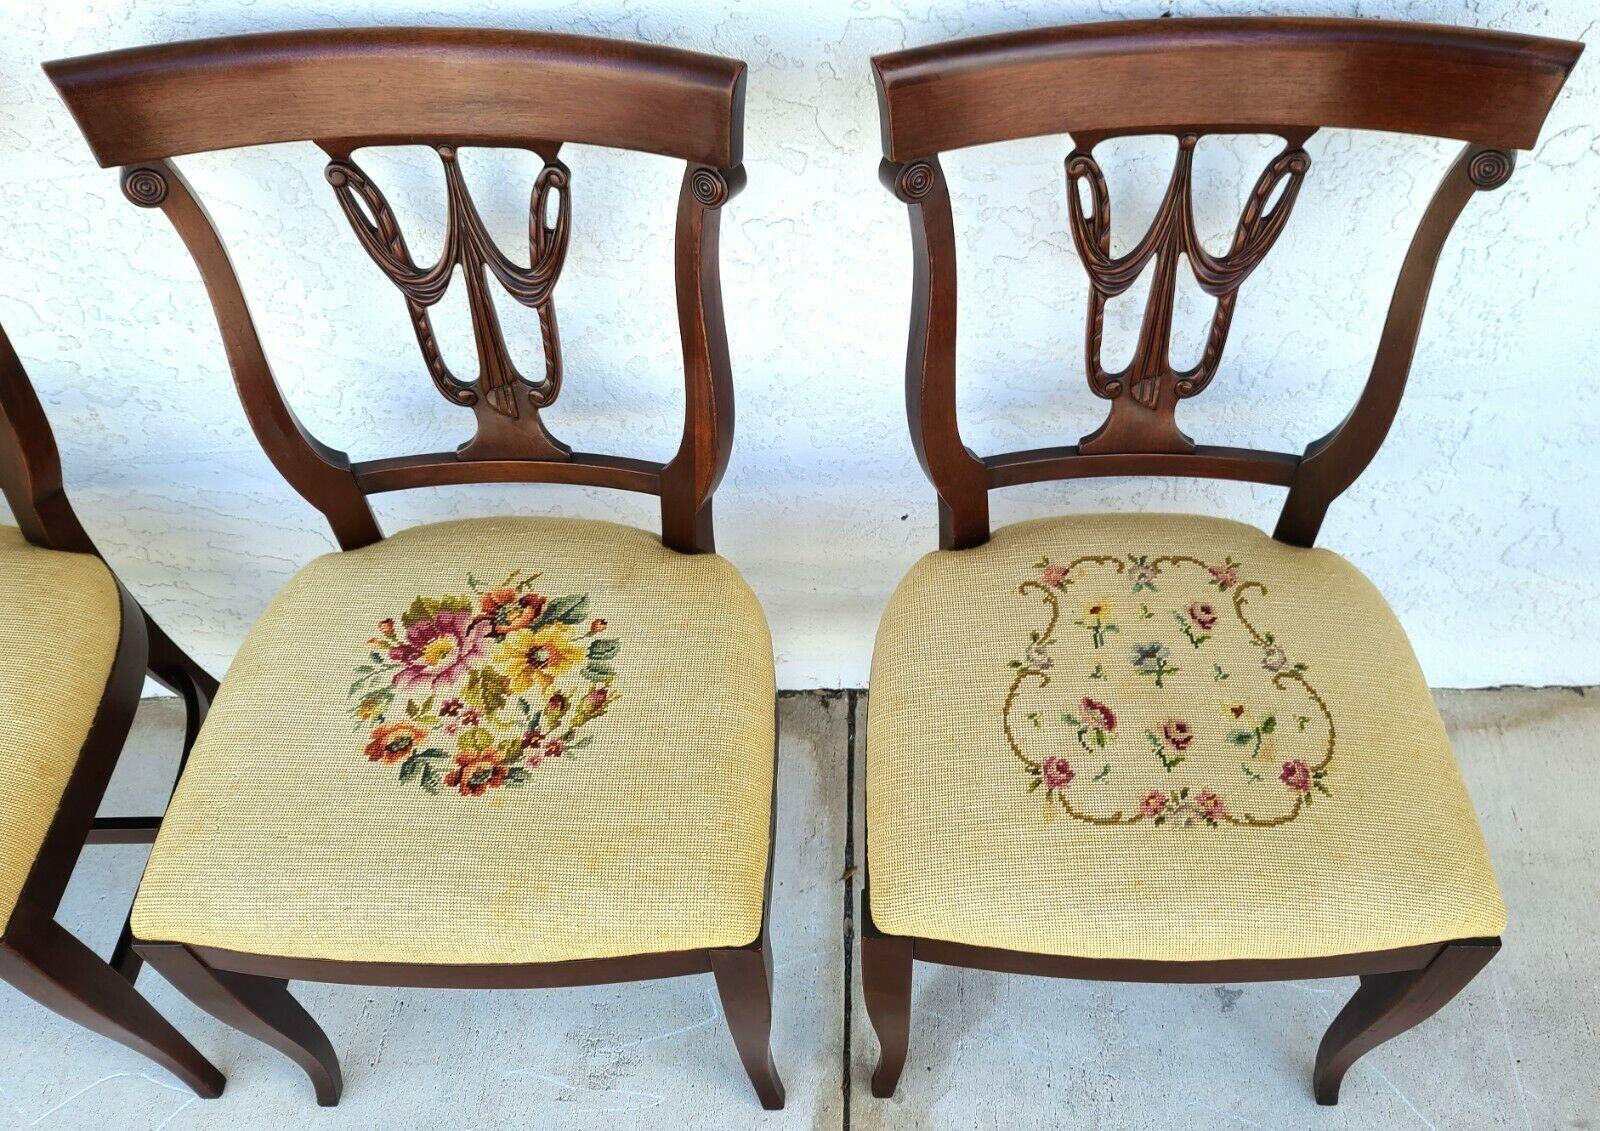 Antique 1920s Italian Regency Mahogany Dining Chairs with Needlepoint -Set of 6 1